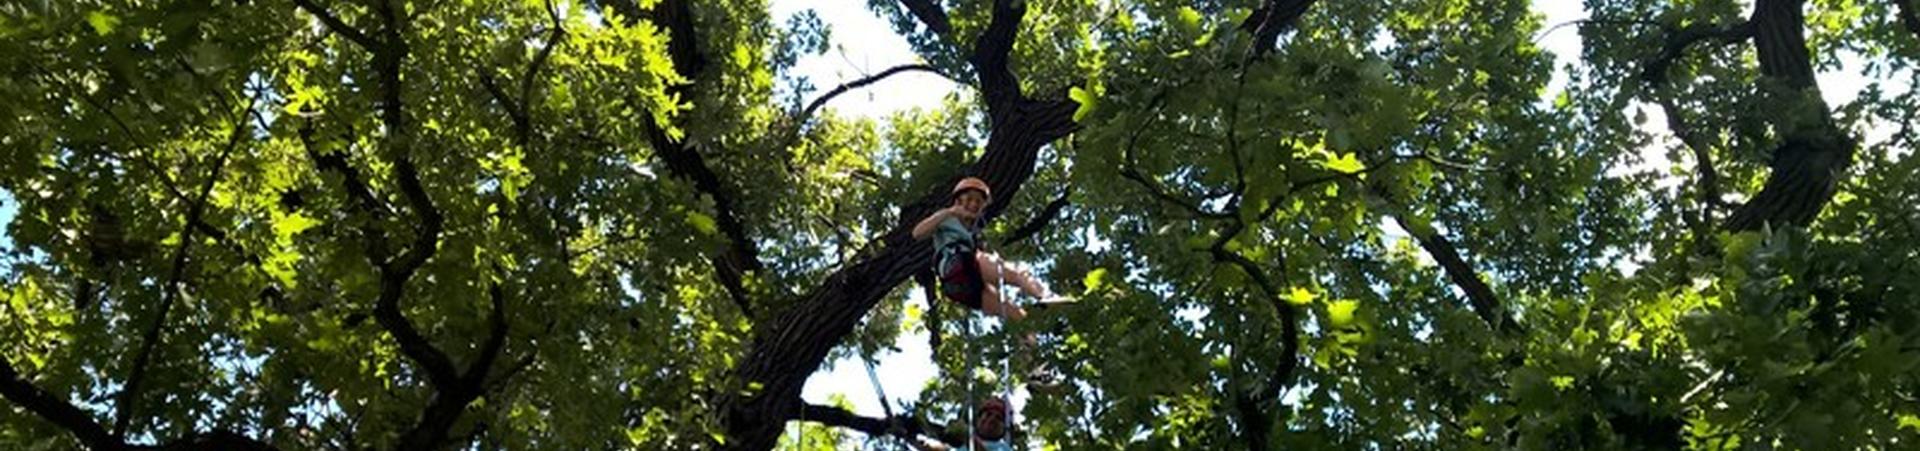 A child climbs a tree